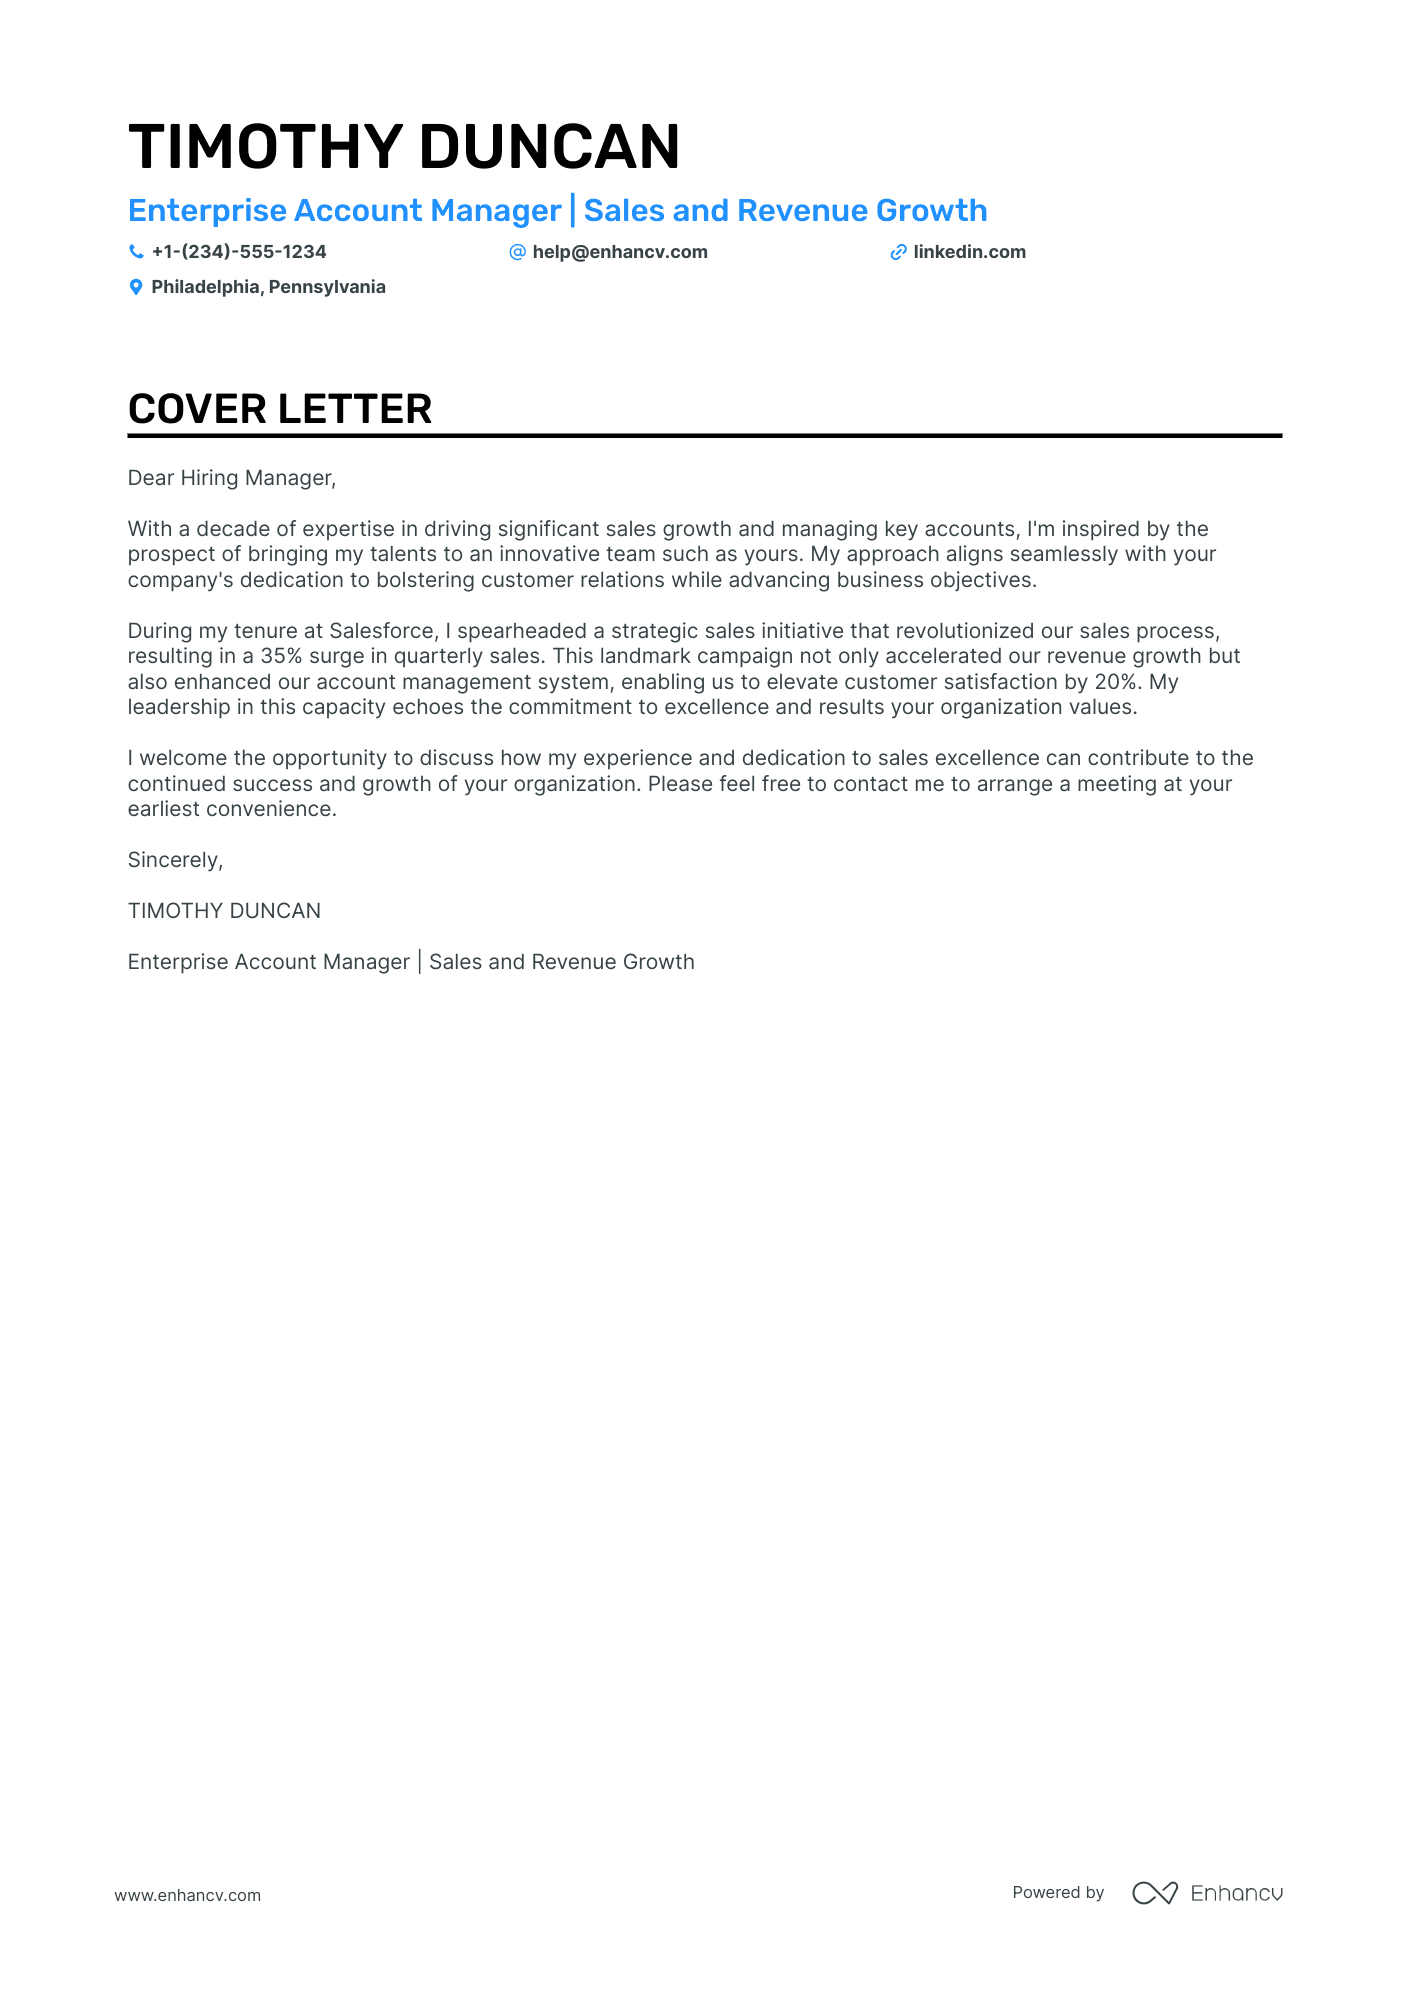 Enterprise Account Manager cover letter